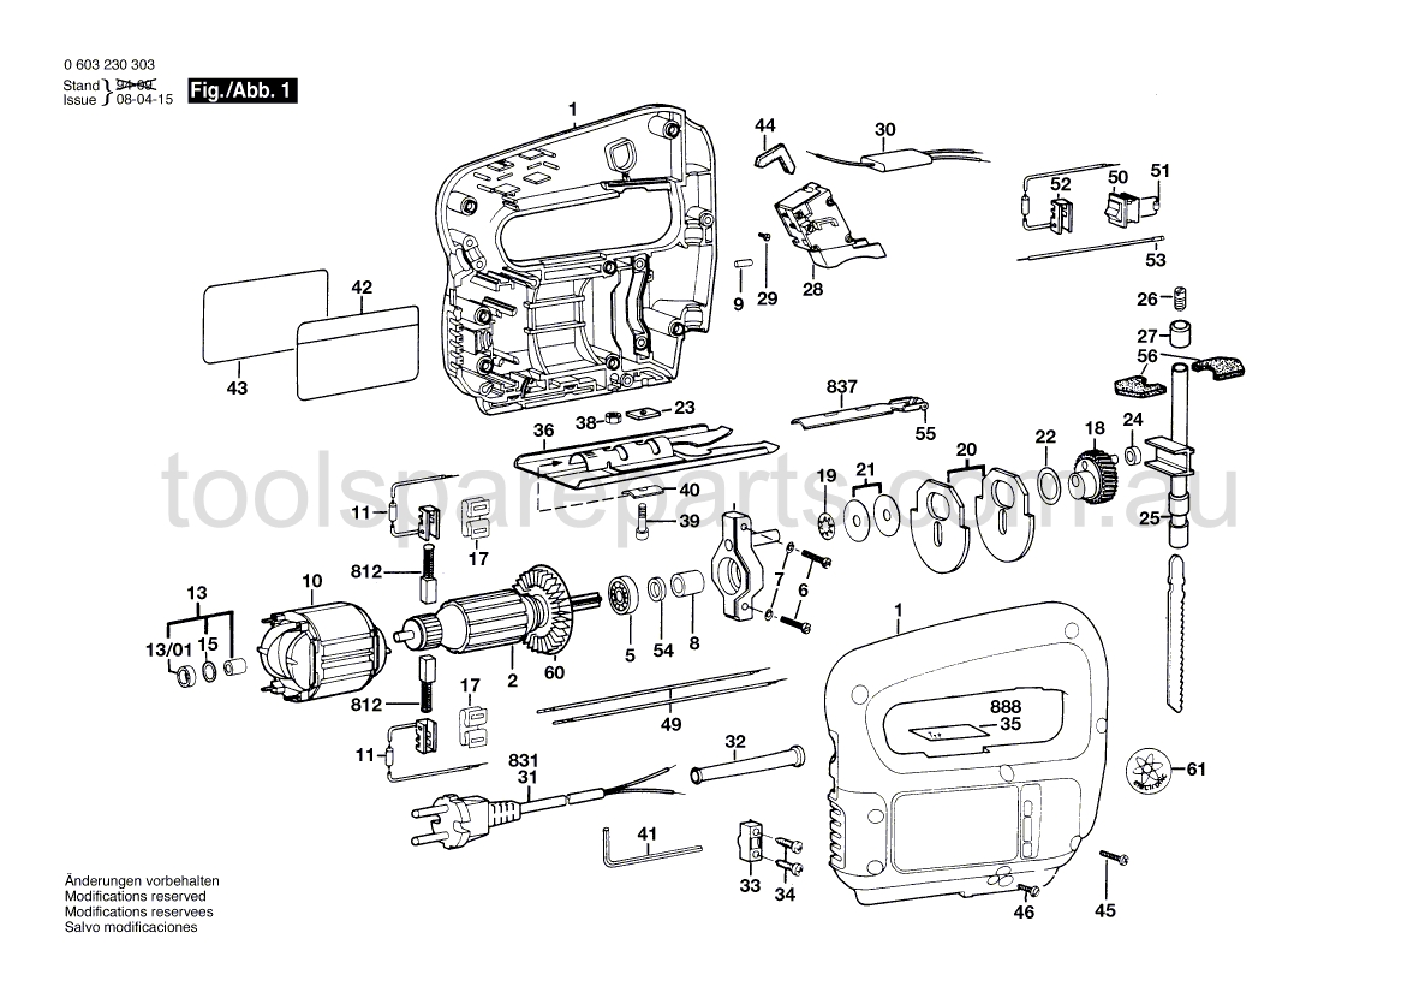 Bosch PST 50-2 0603230337  Diagram 1